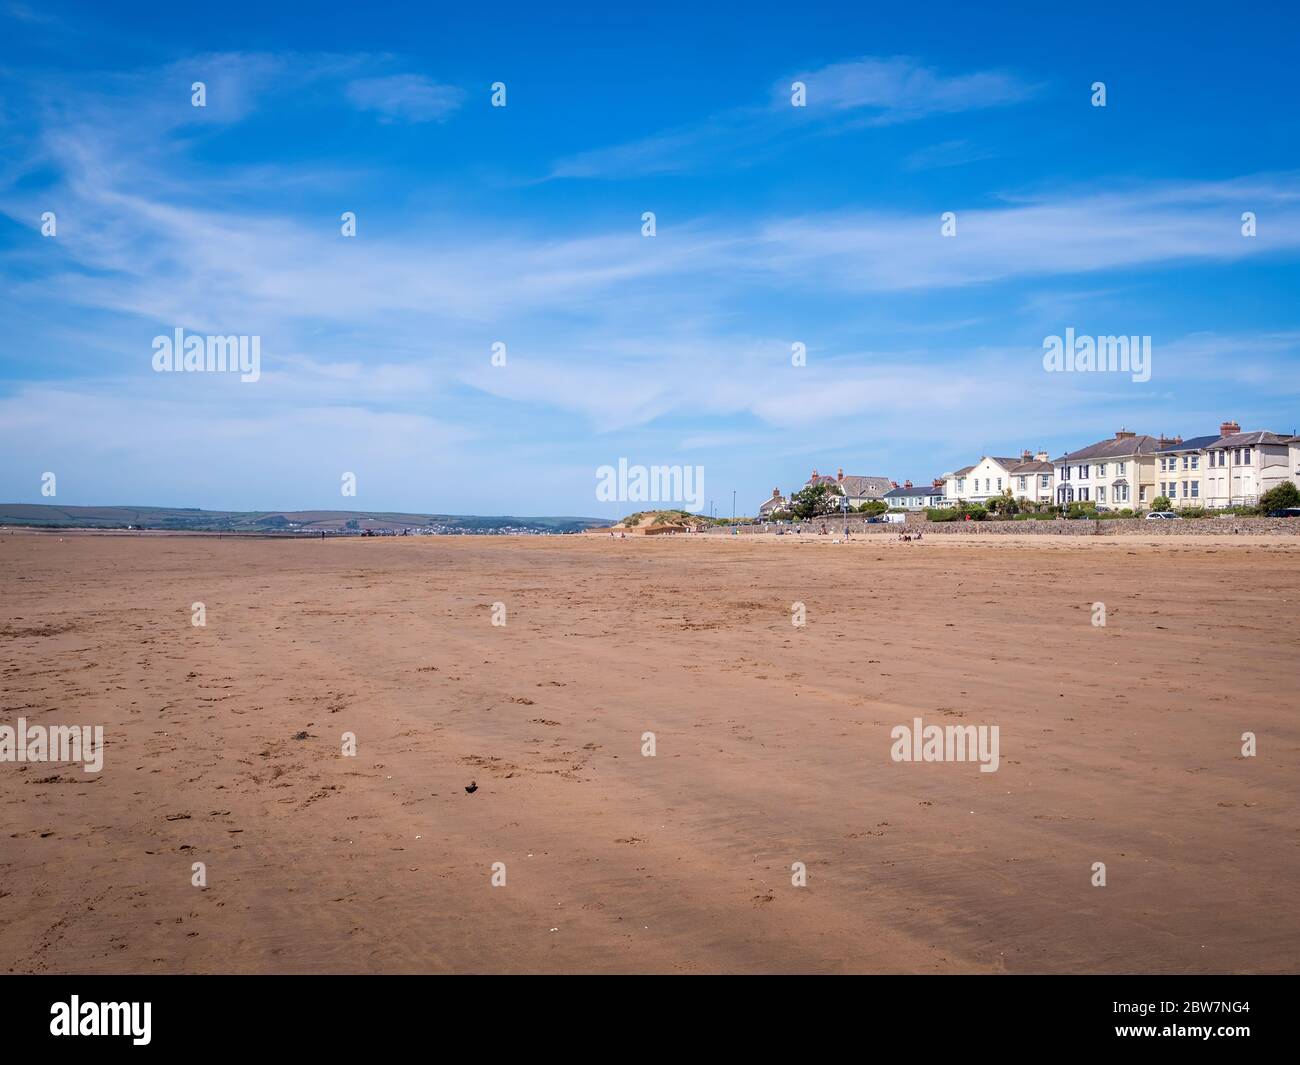 INSTOW, DEVON, UK - MAY 25 2020: Almost deserted sandy beach, Instow, north Devon UK. Few people. Tourism decimated by Coronavirus, Covid lockdown. Stock Photo